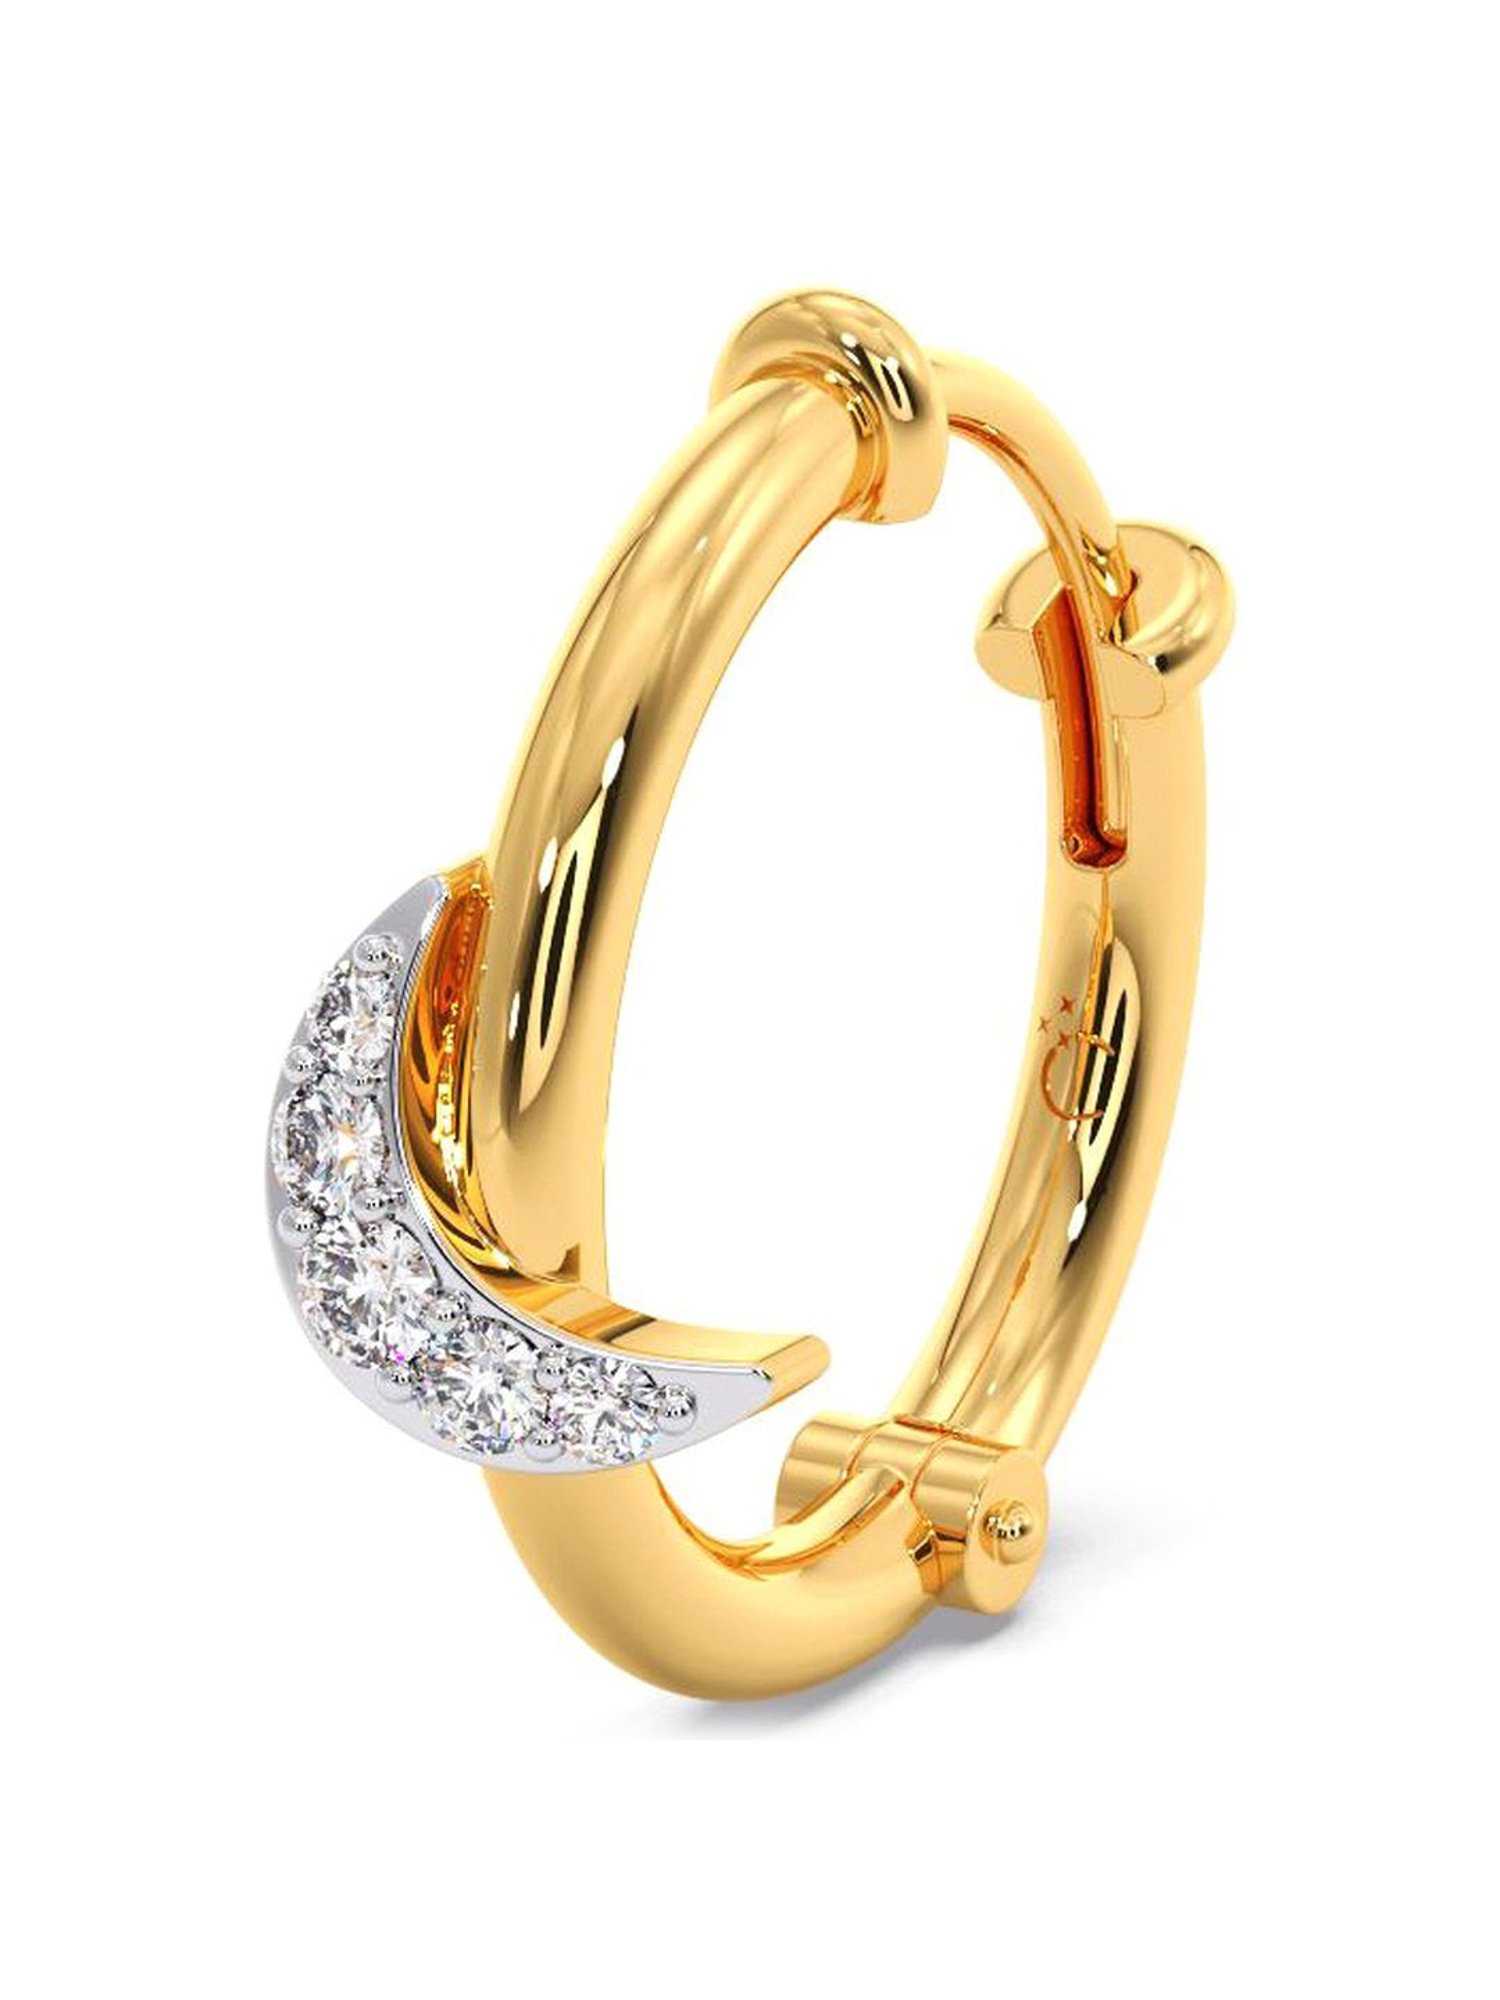 Buy Diamond Nose Stud, Diamond Nose Ring, 2mm Diamond Nose Ring, 14k Gold  Nose Ring, Genuine Diamond Nose Ring, Small Diamond Nose Stud, SKU 184  Online in India - Etsy